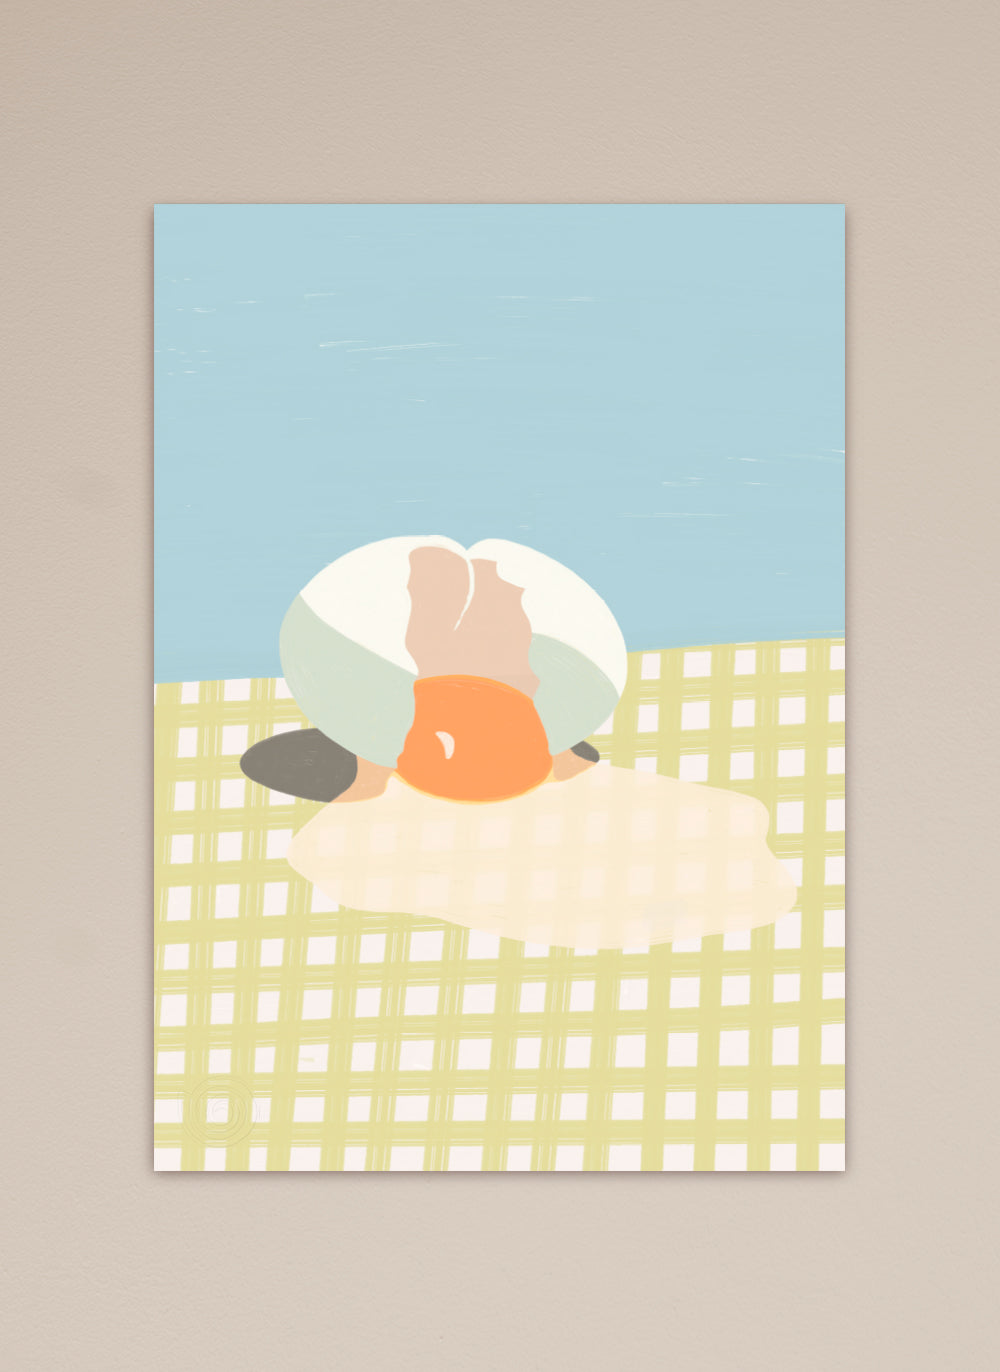 Broken Eggs Print Poster 40 x 50 cm Kitchen Collection